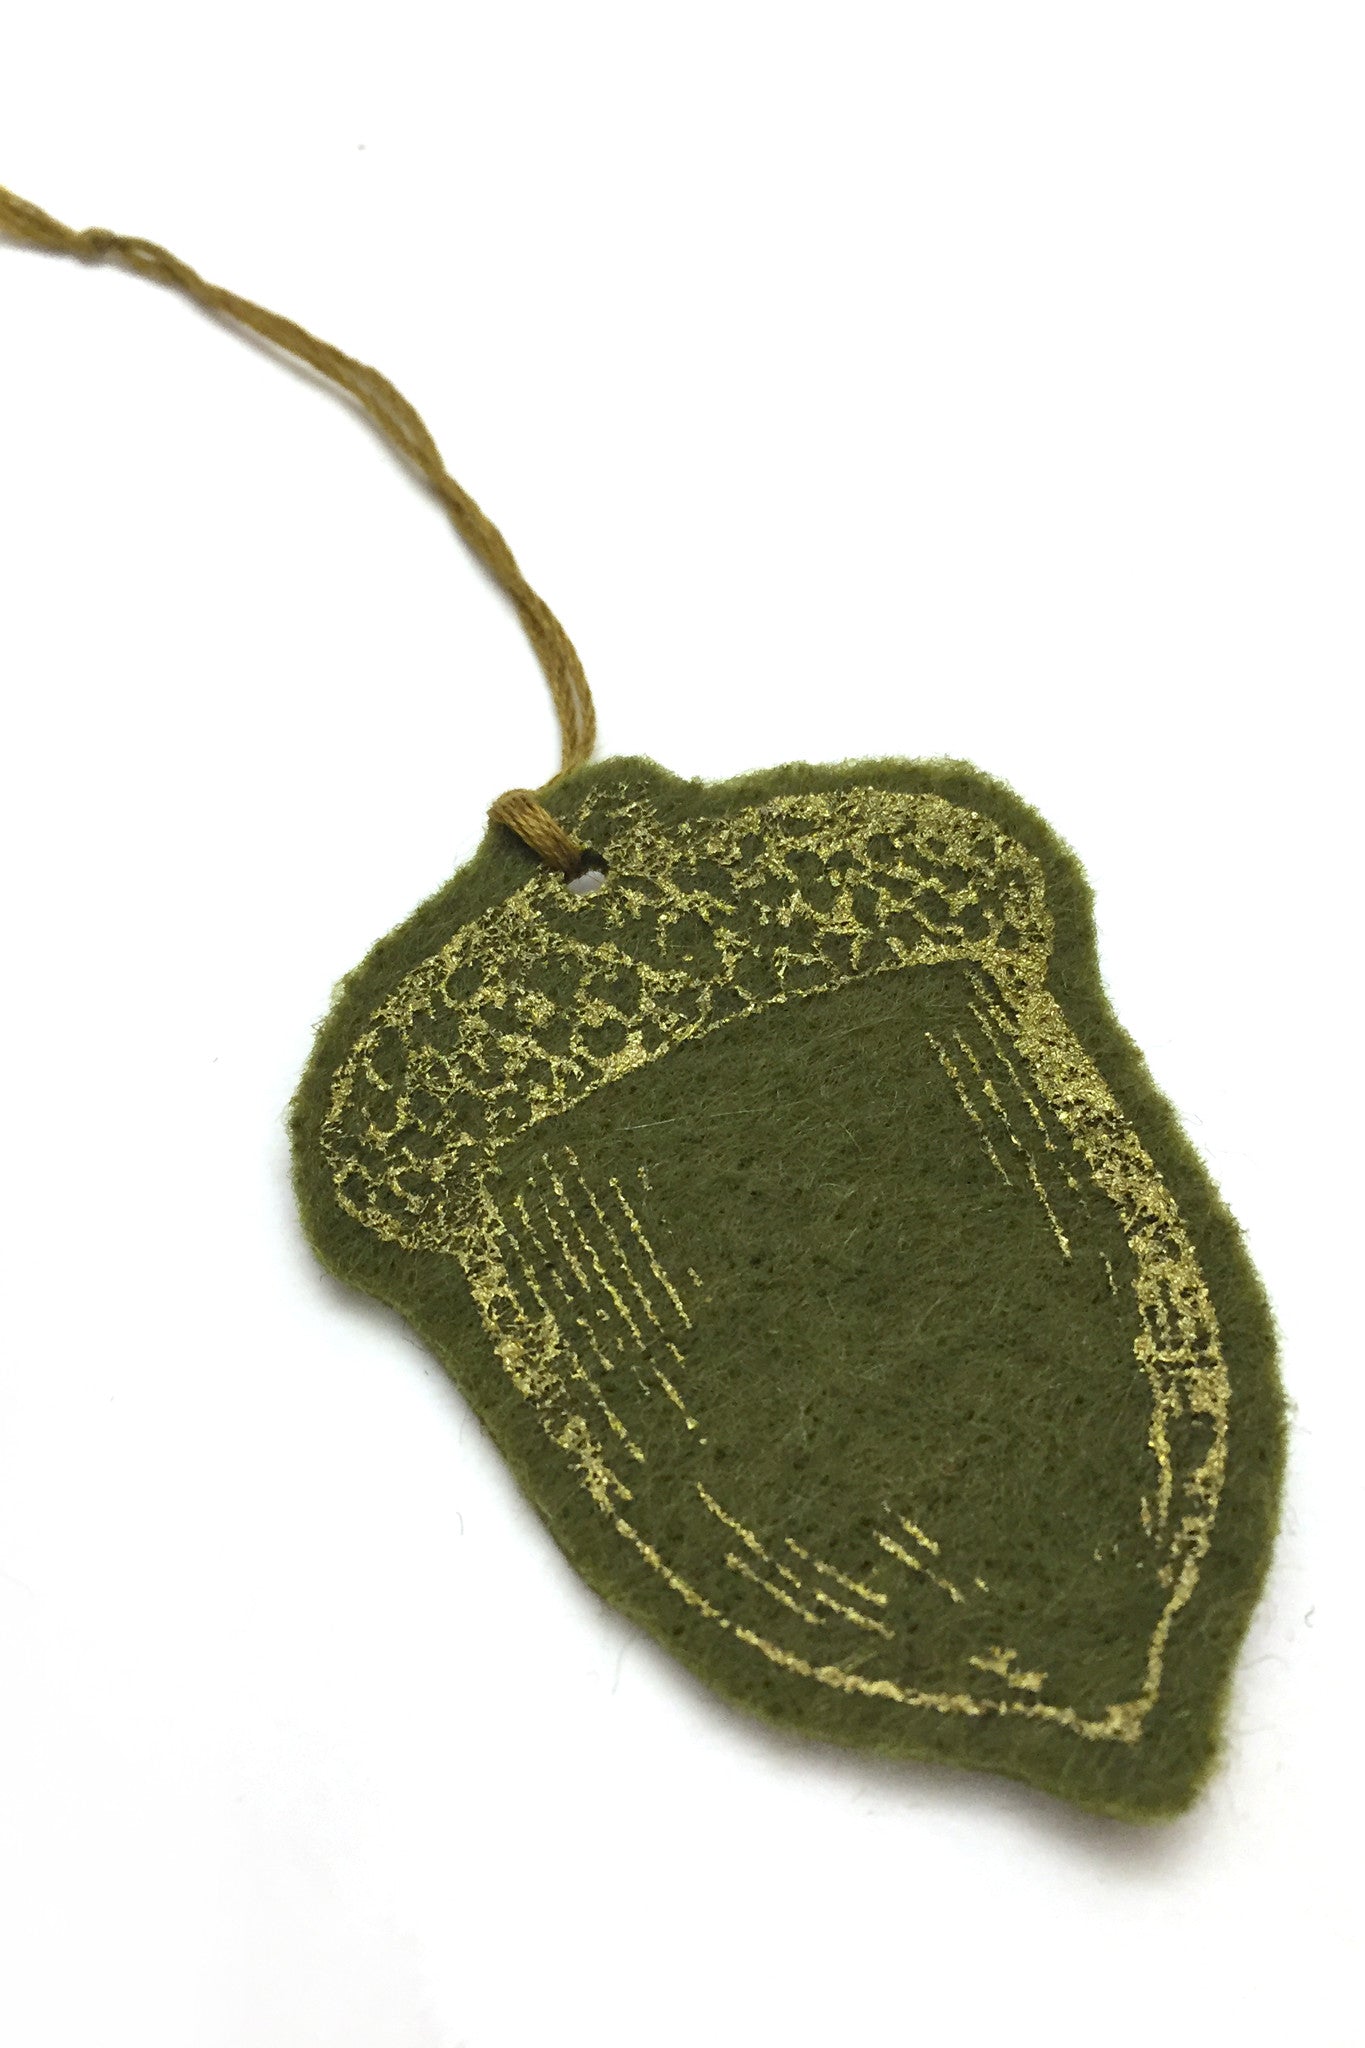 Workshop studio green and gold handprinted and cut acorn ornament detail. Handmade in Ottwa